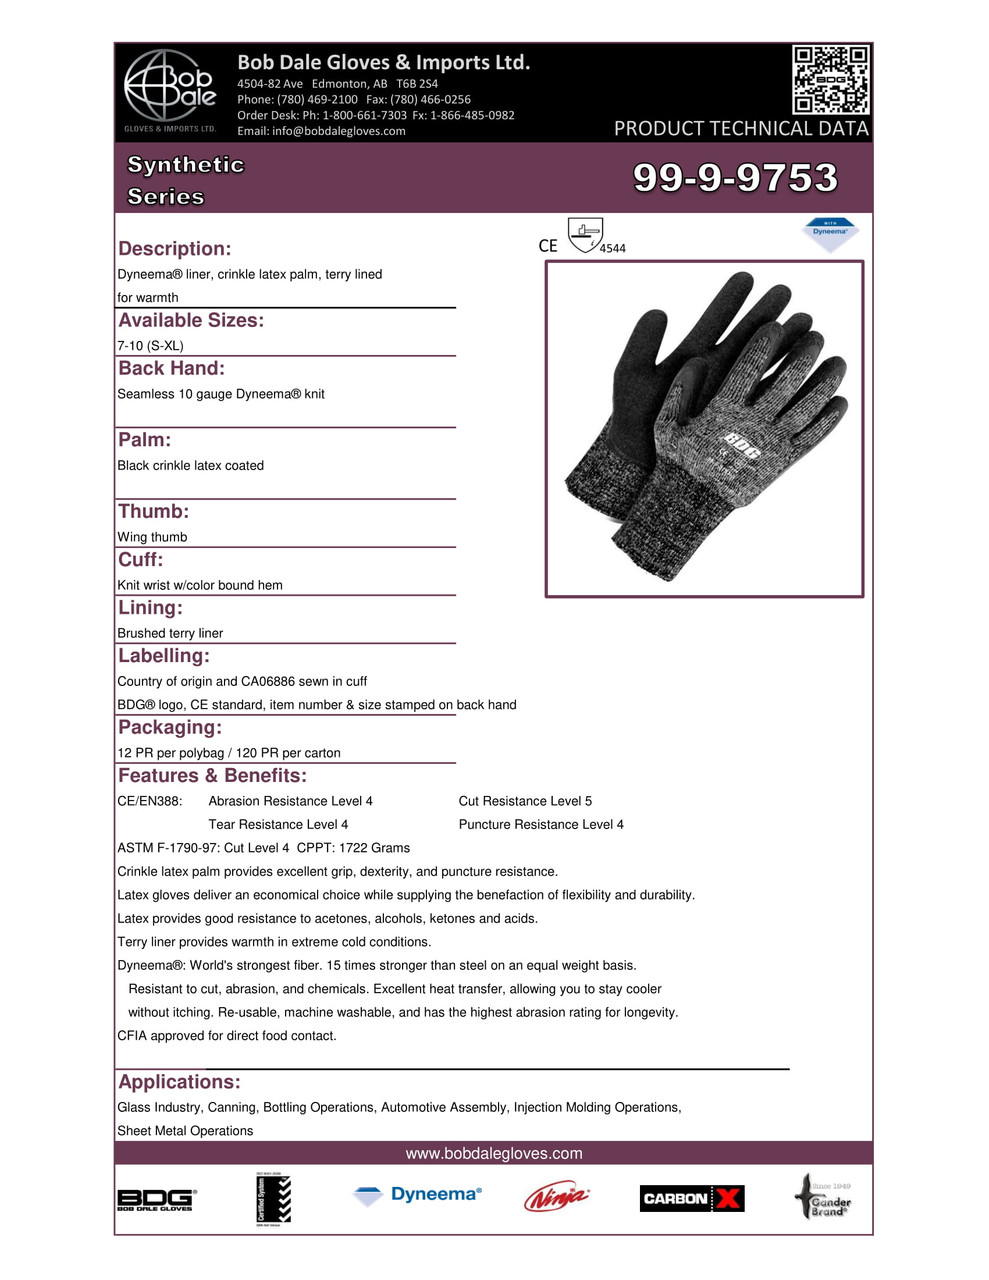 Winter BDG® Crinkle Latex Coated Terry Lined Dyneema® Knit Cut-Rez Glove Black/White Stripes  99-9-9753